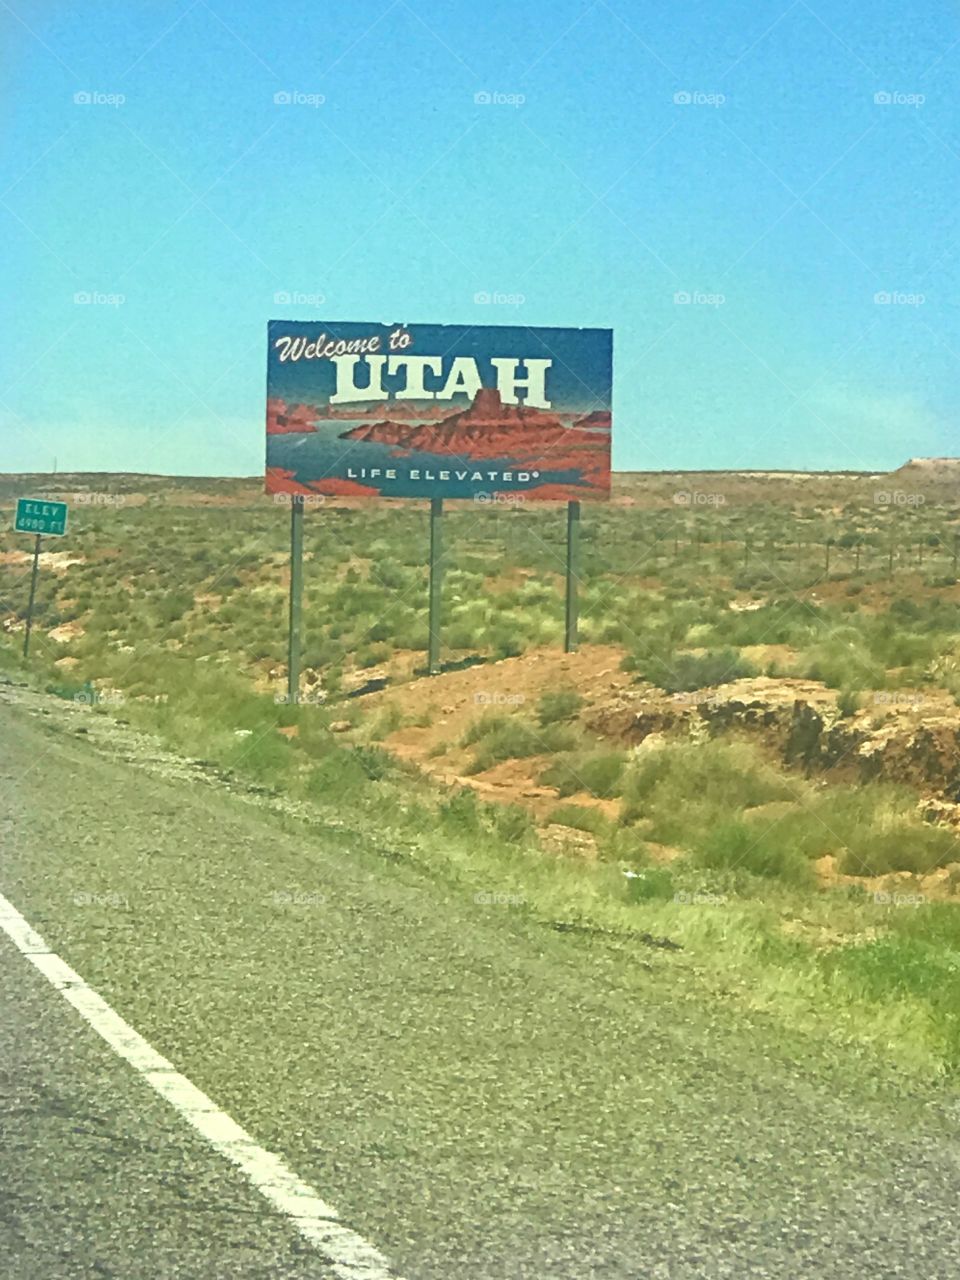 Traveling Utah